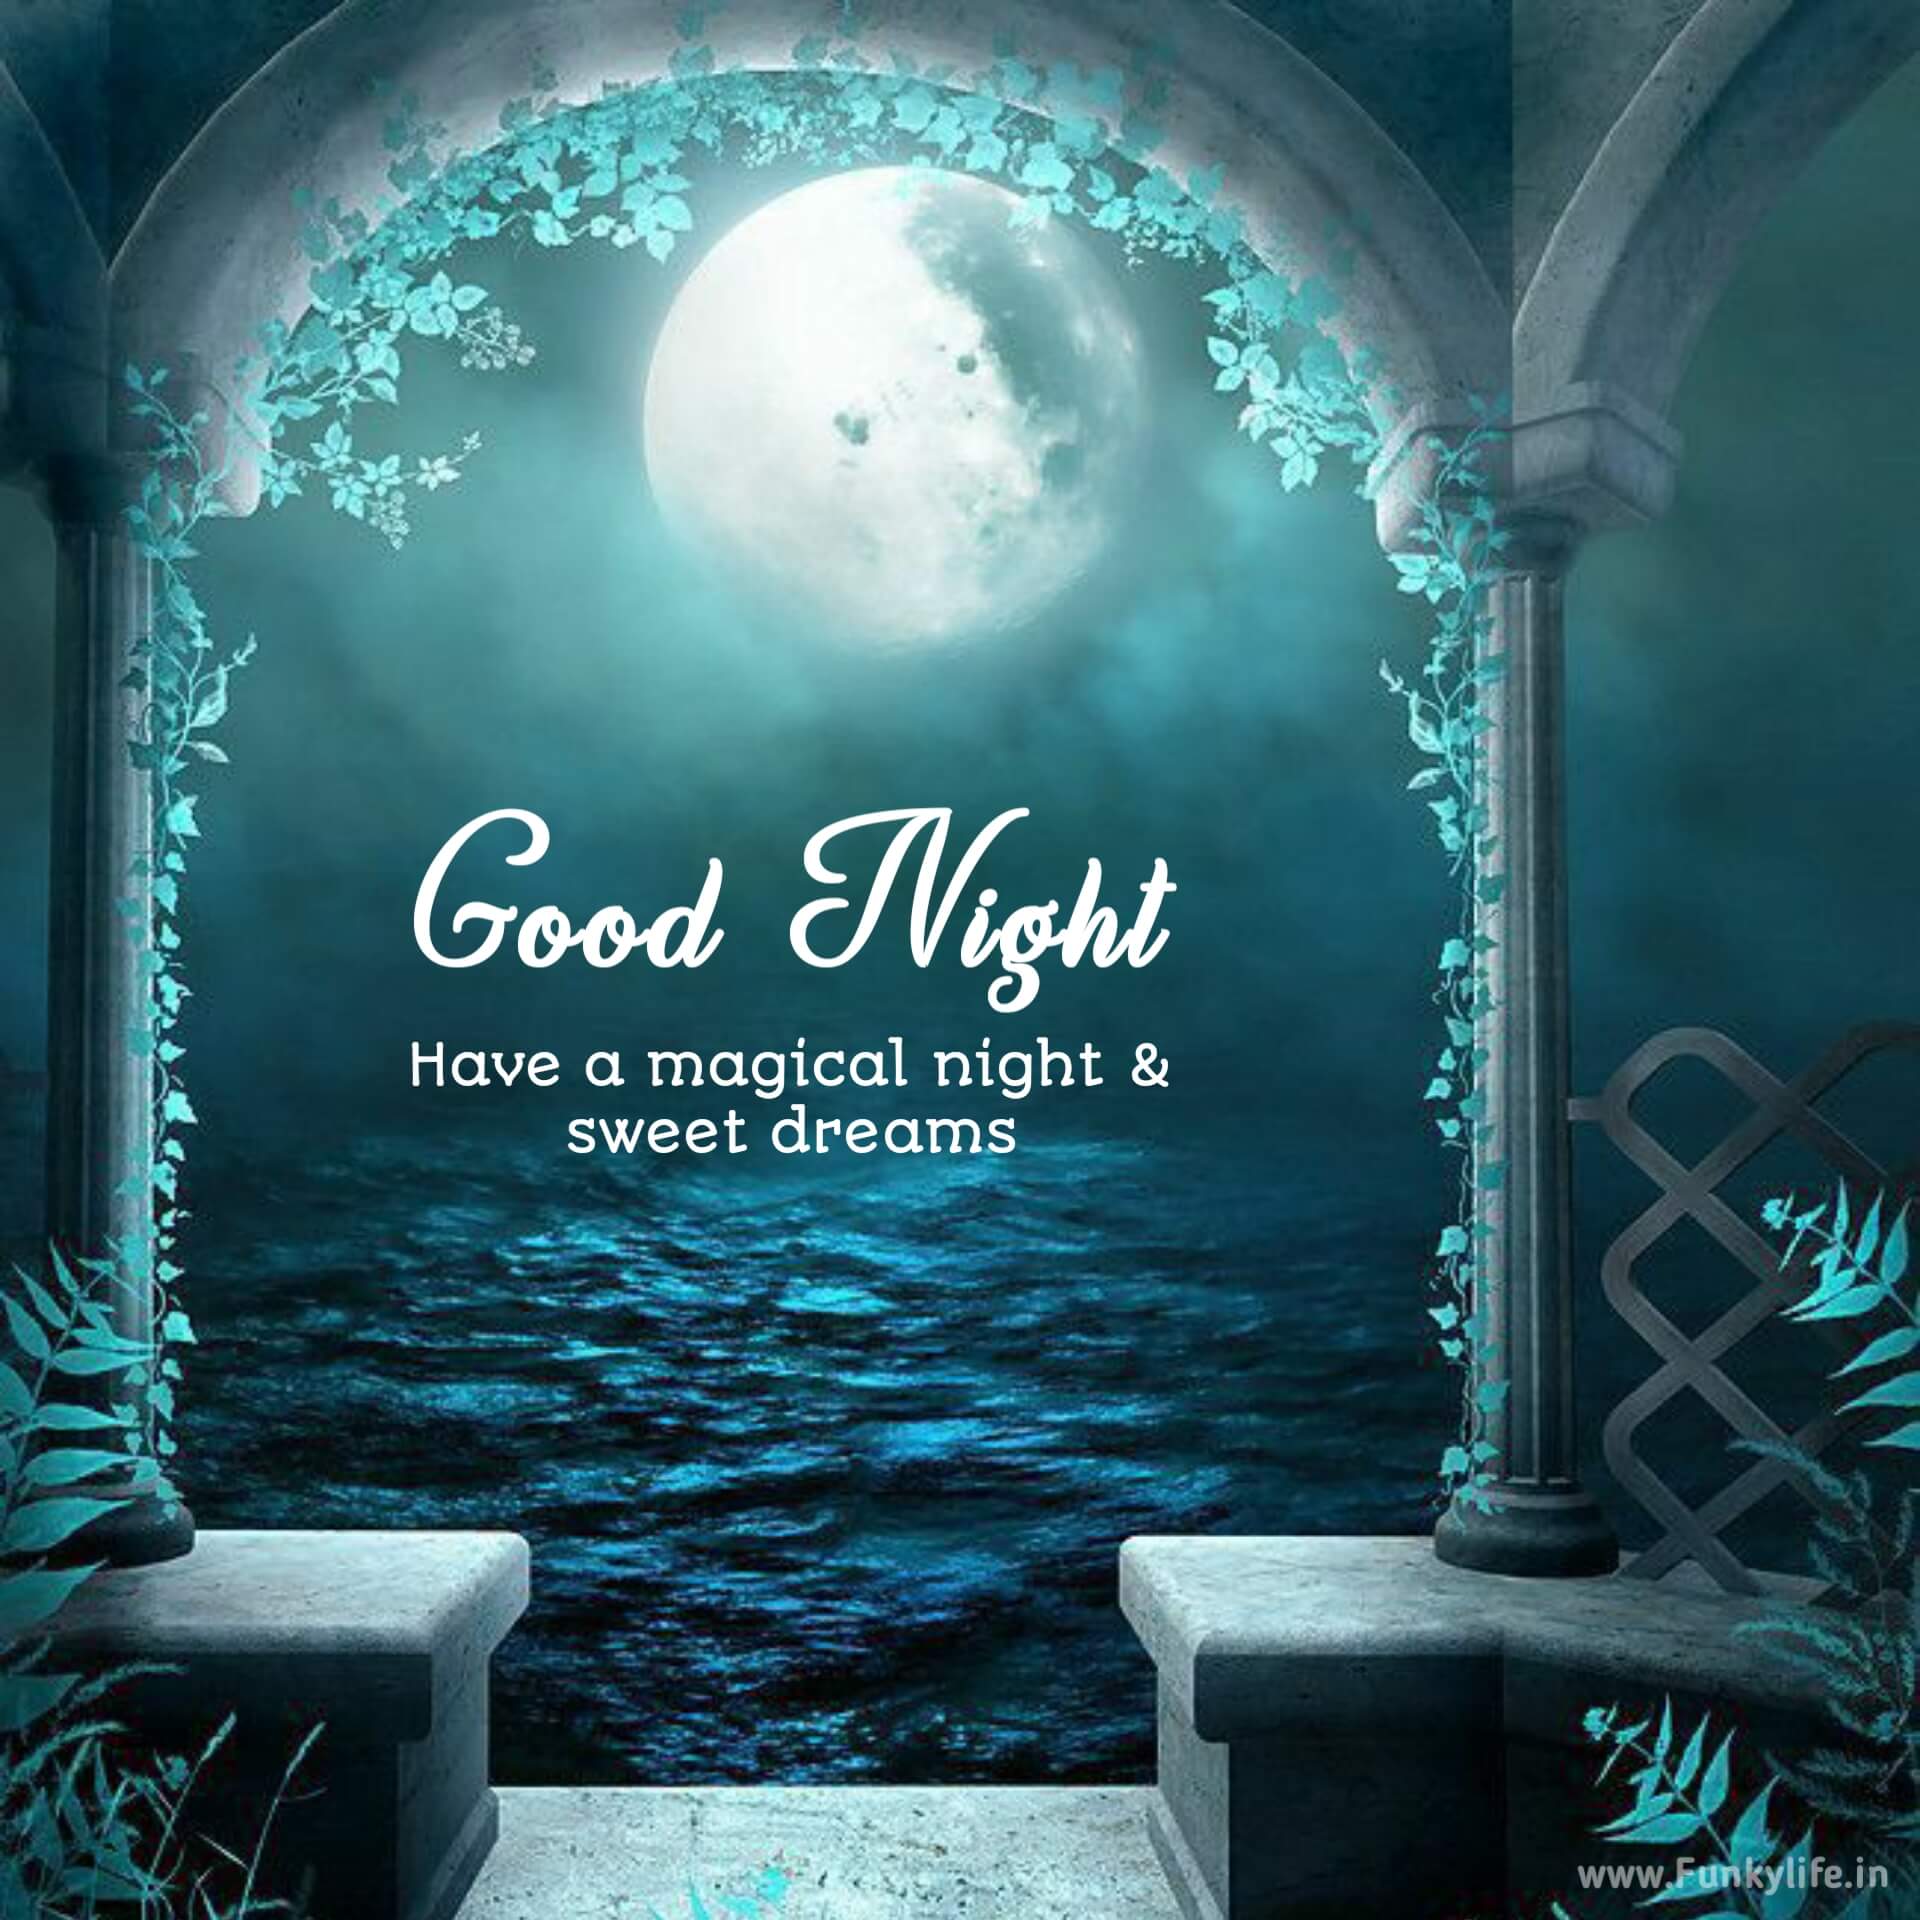 Good Night Wishes Image